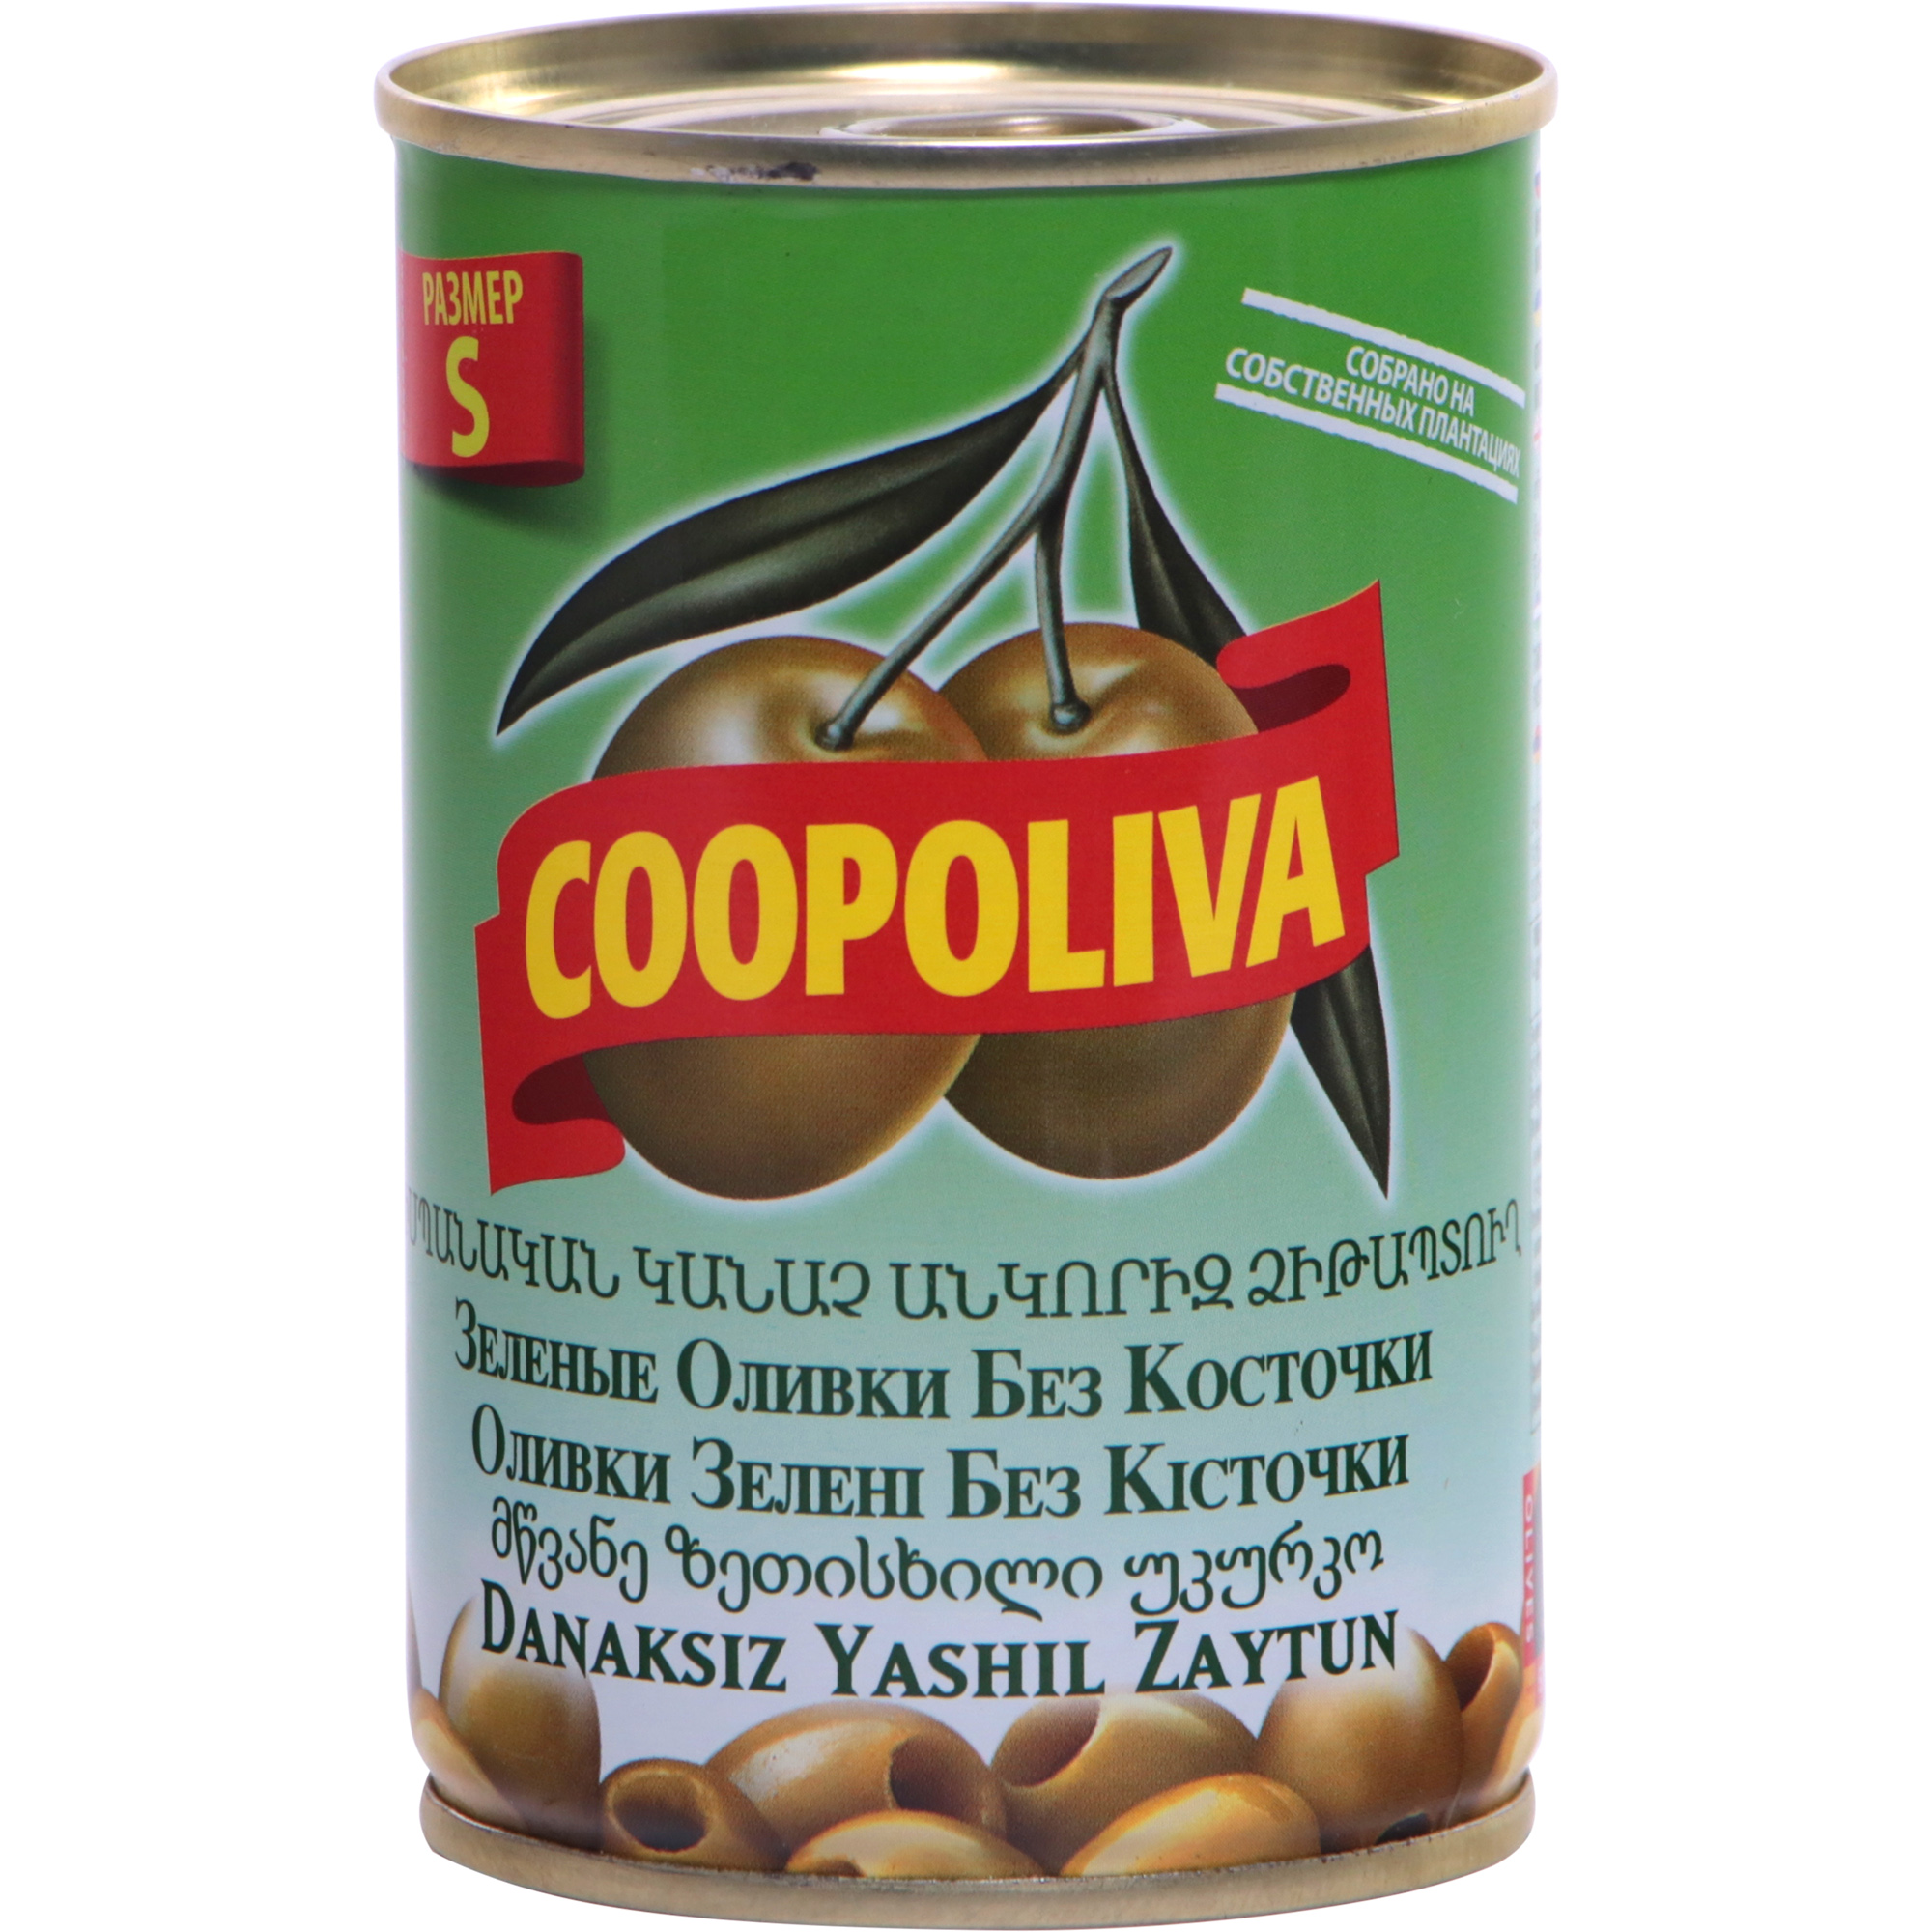 Оливки COOPOLIVA S без косточки, 300 г